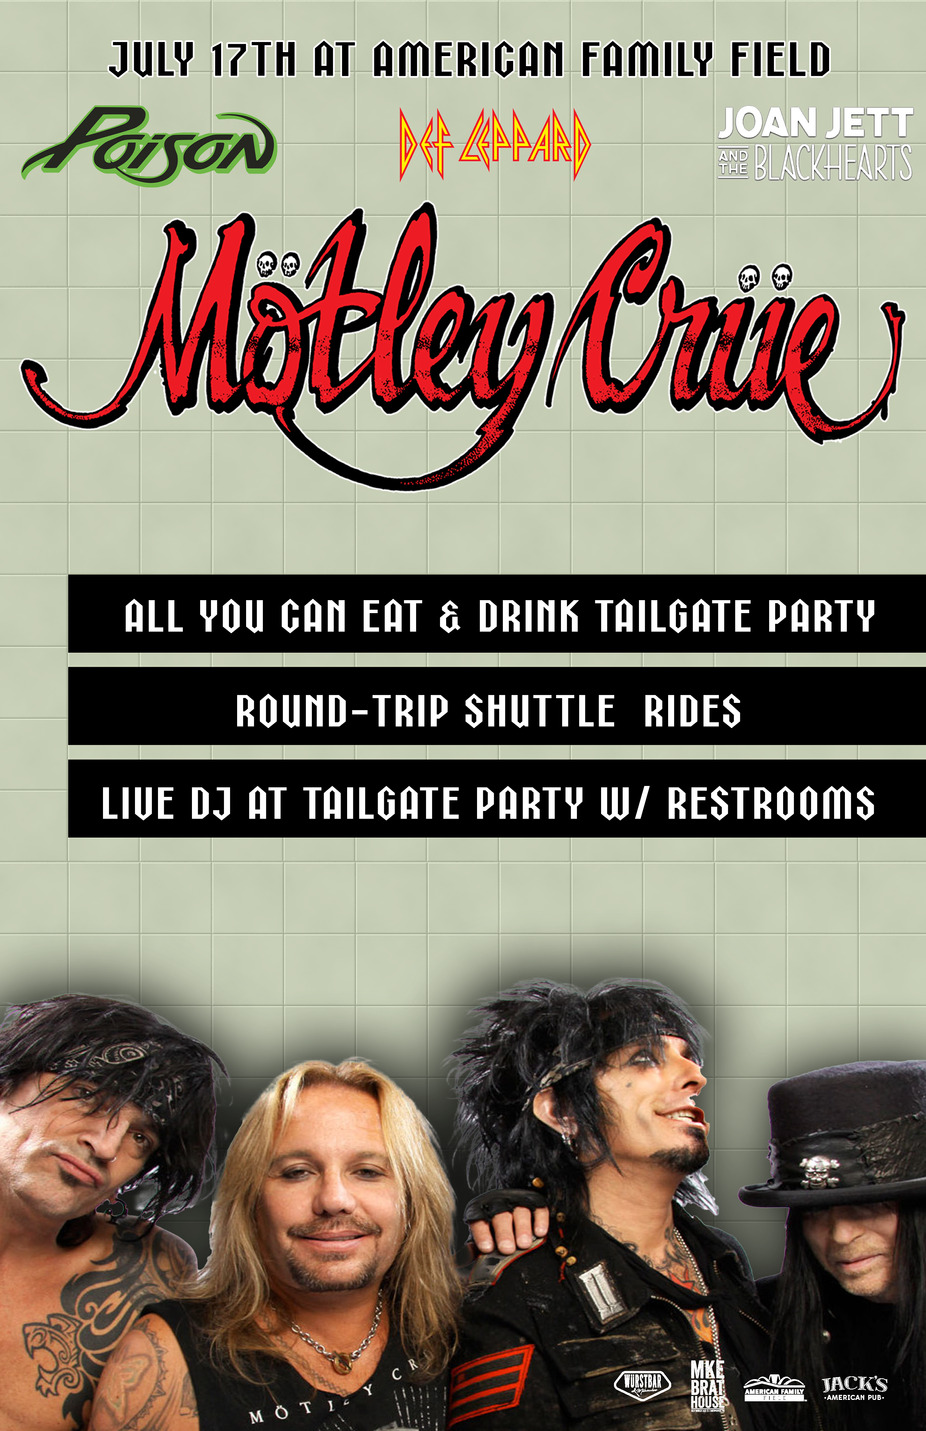 Mötley Crüe/Def Leppard/Poison/Joan Jett and the Blackhearts event photo